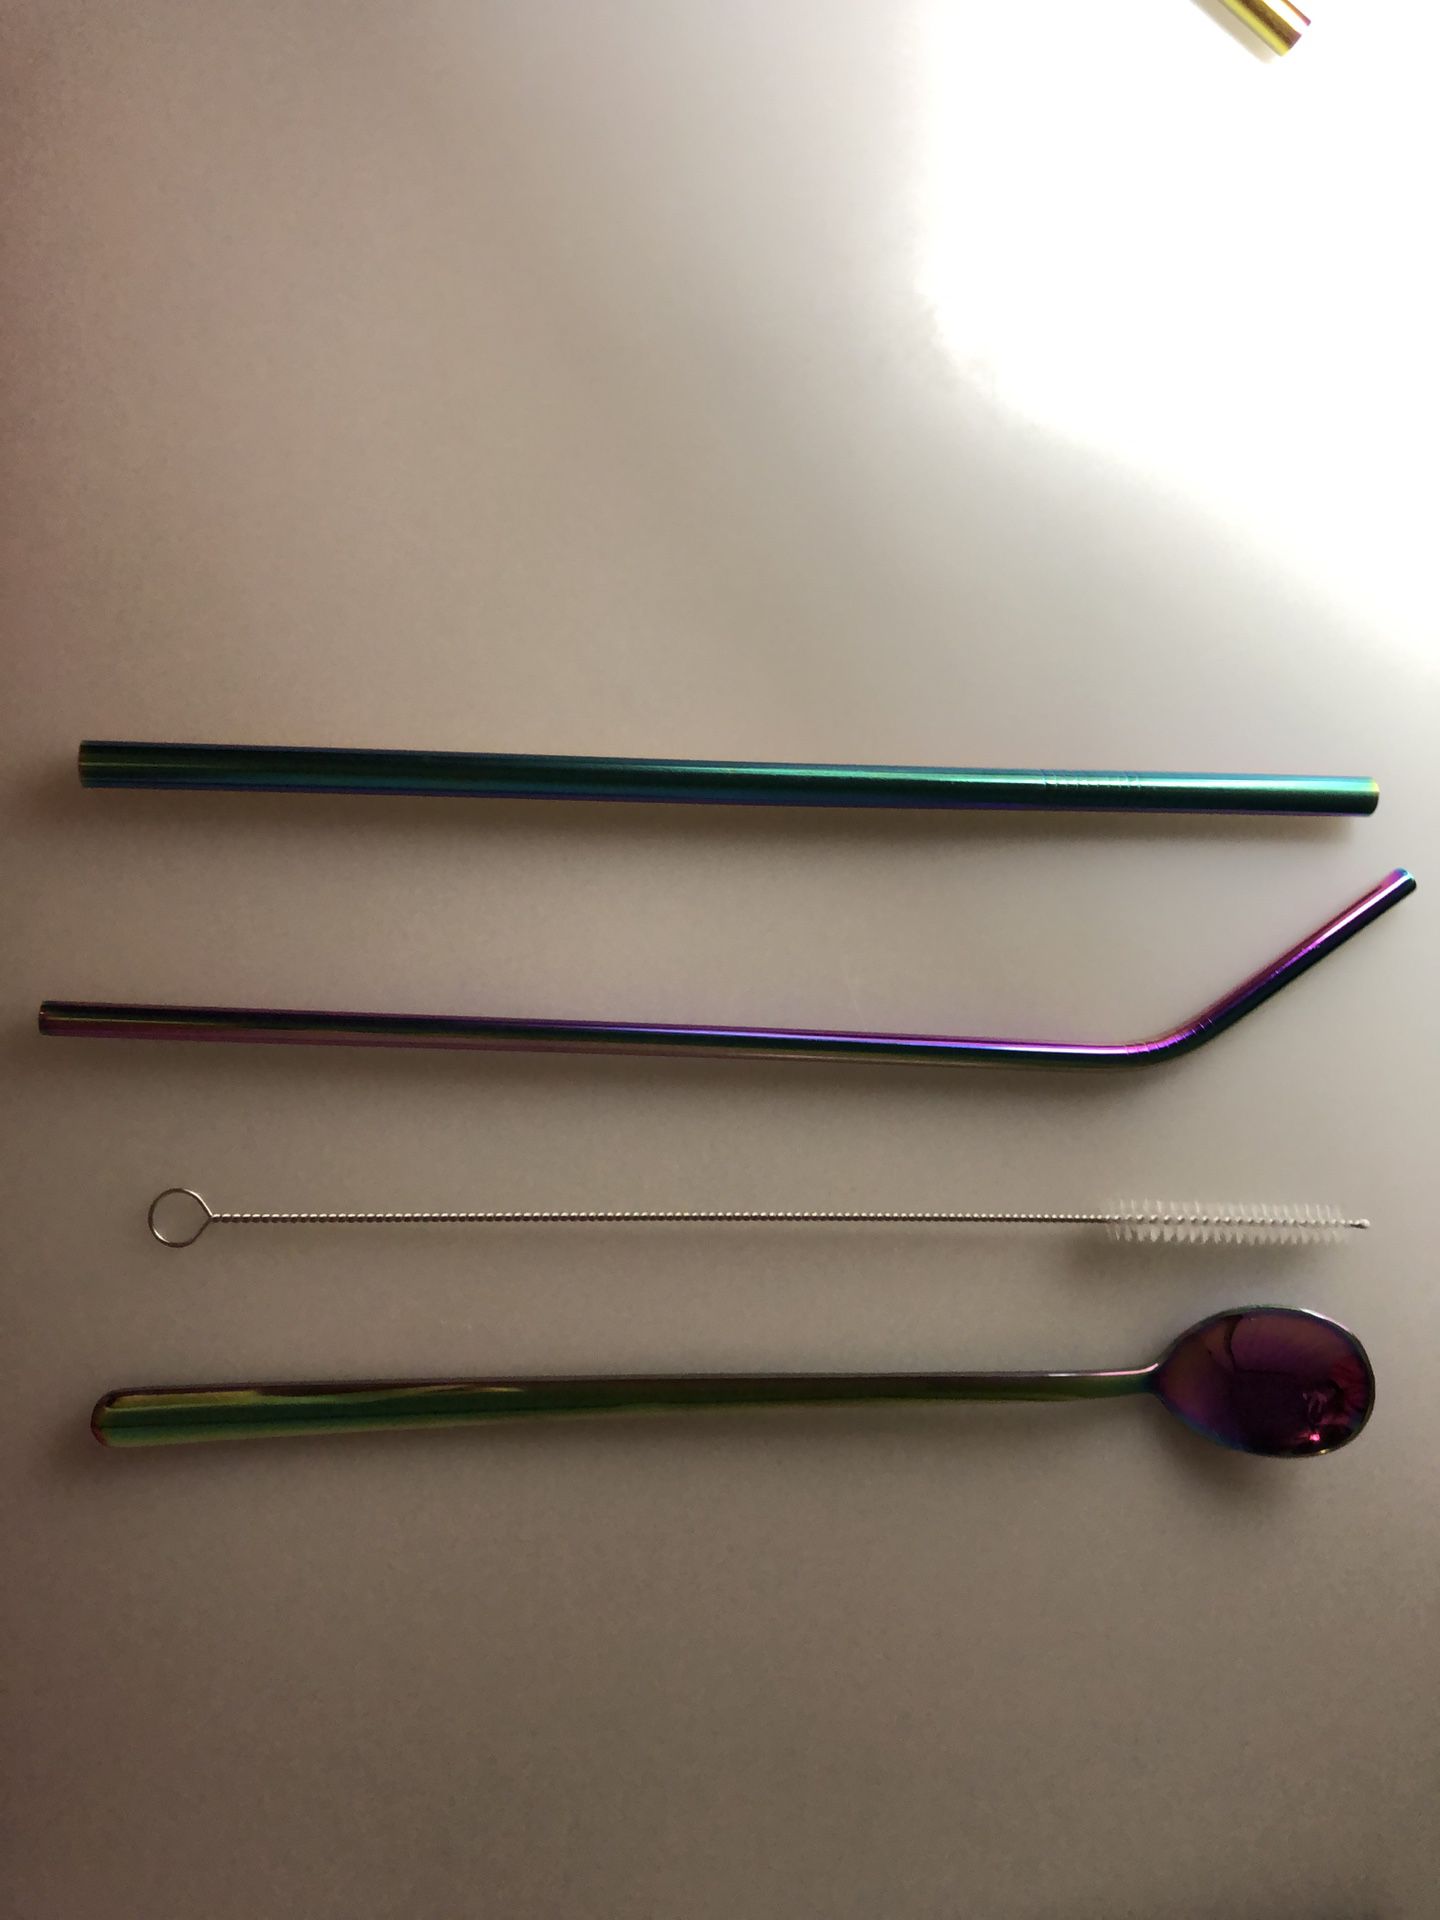 Reusable straws and spoon